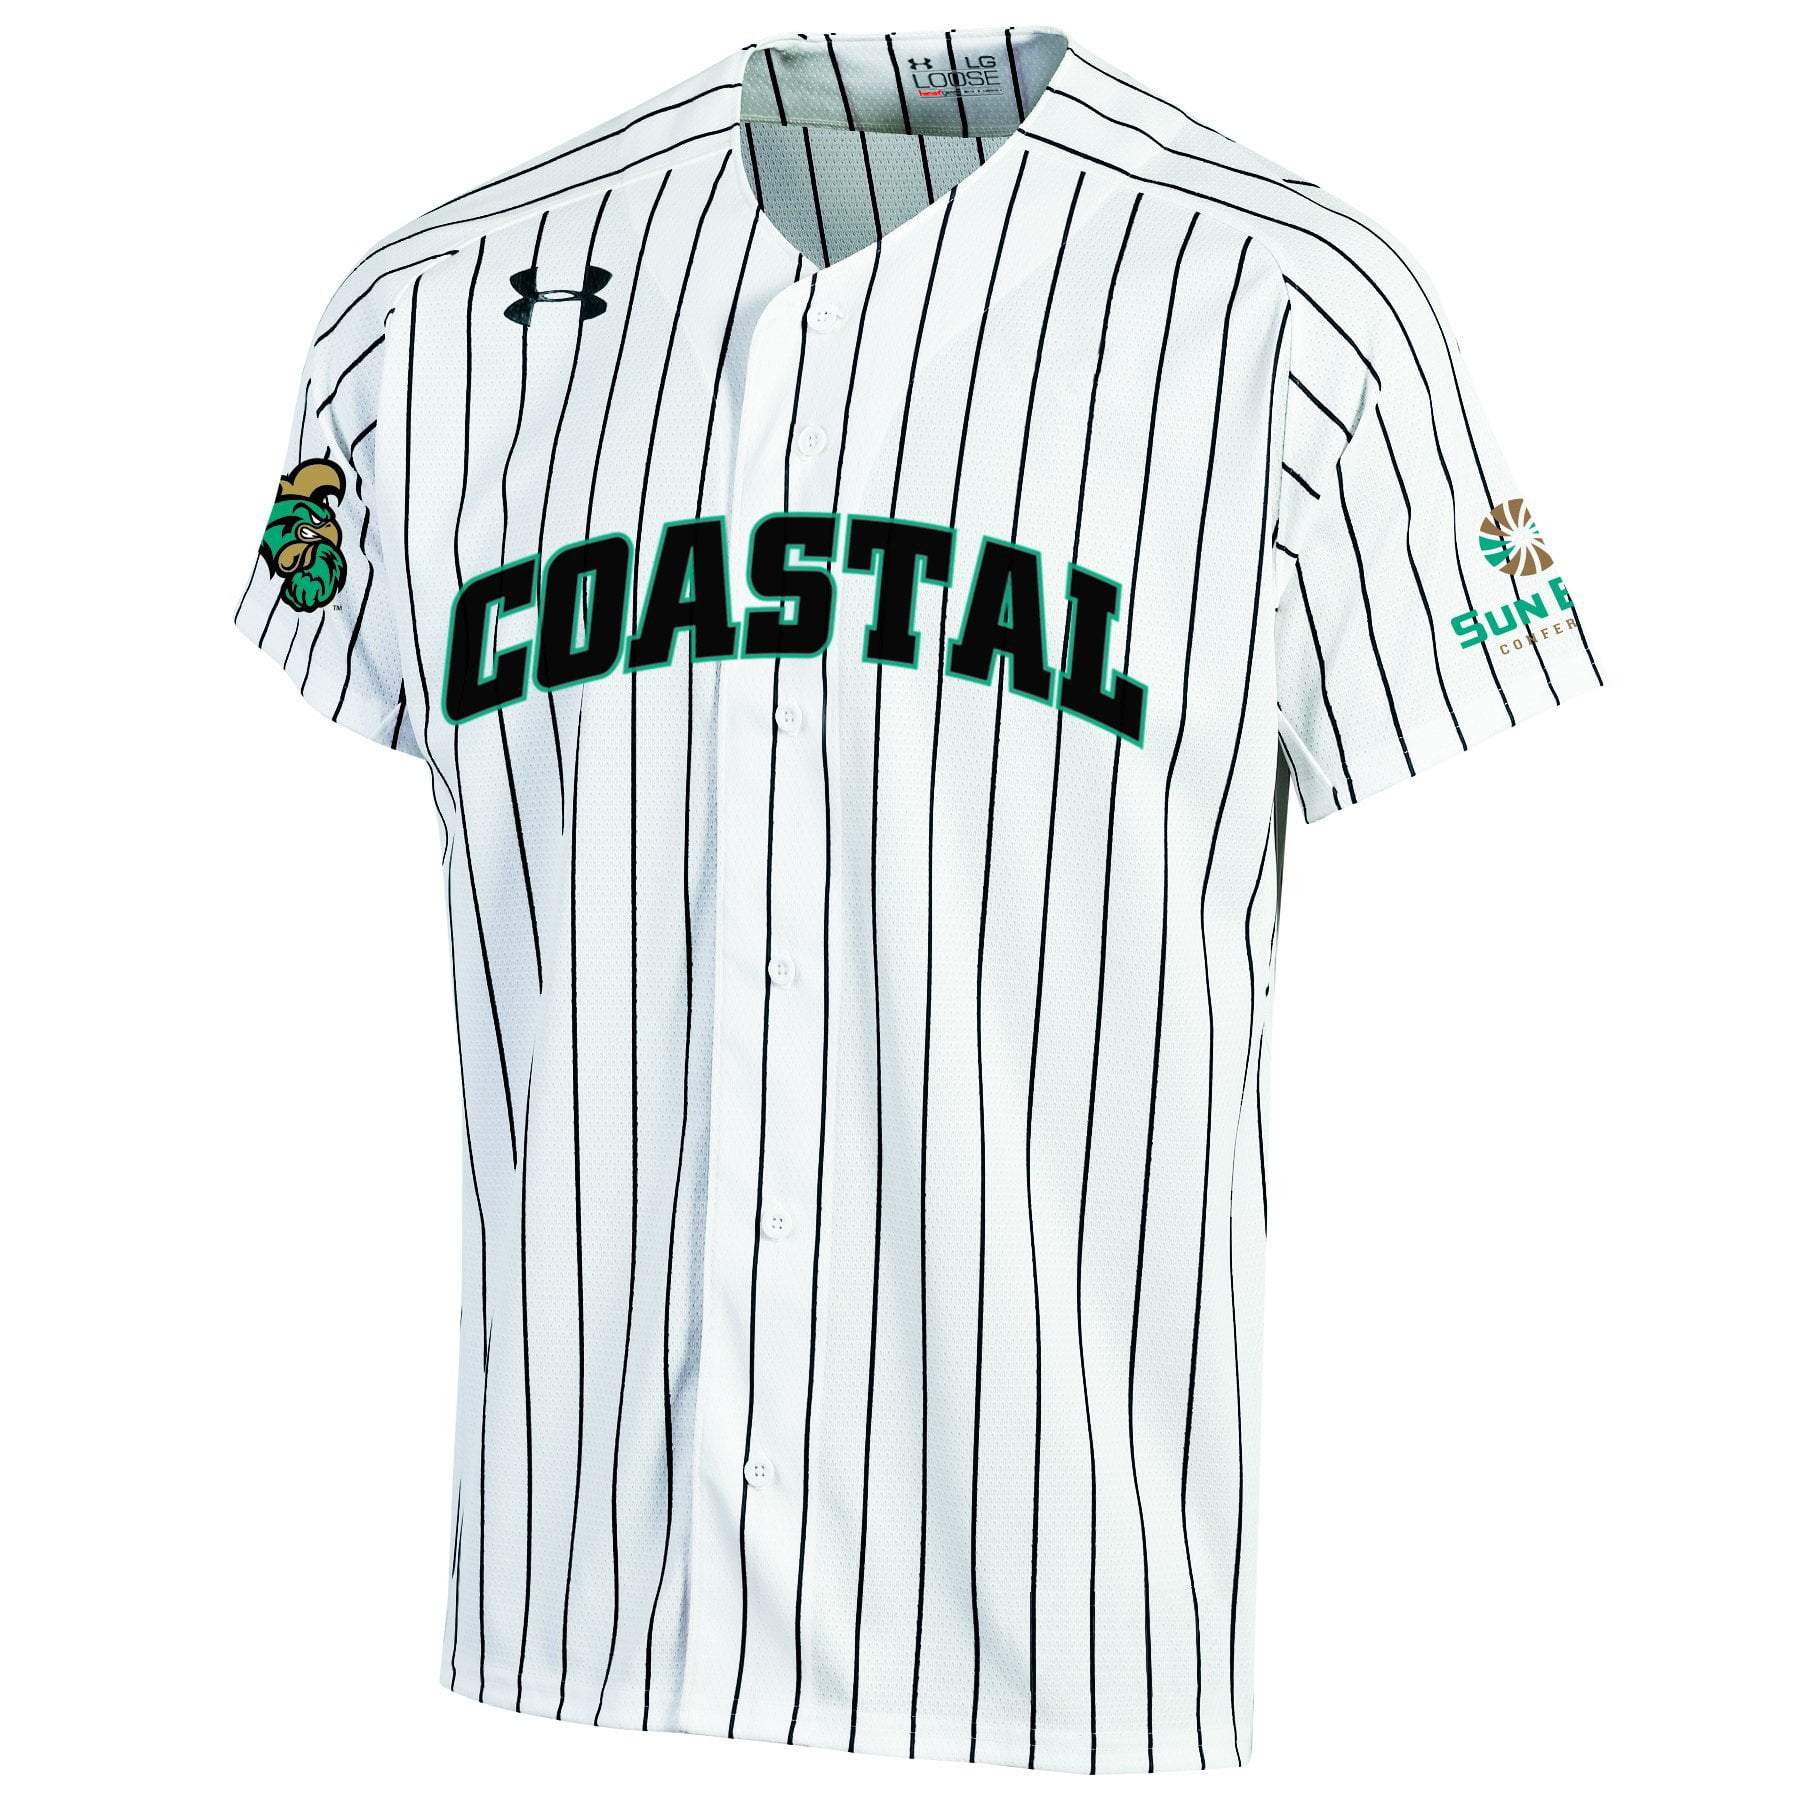 Coastal Carolina Chanticleers Under Armour Striped Replica Baseball Jersey